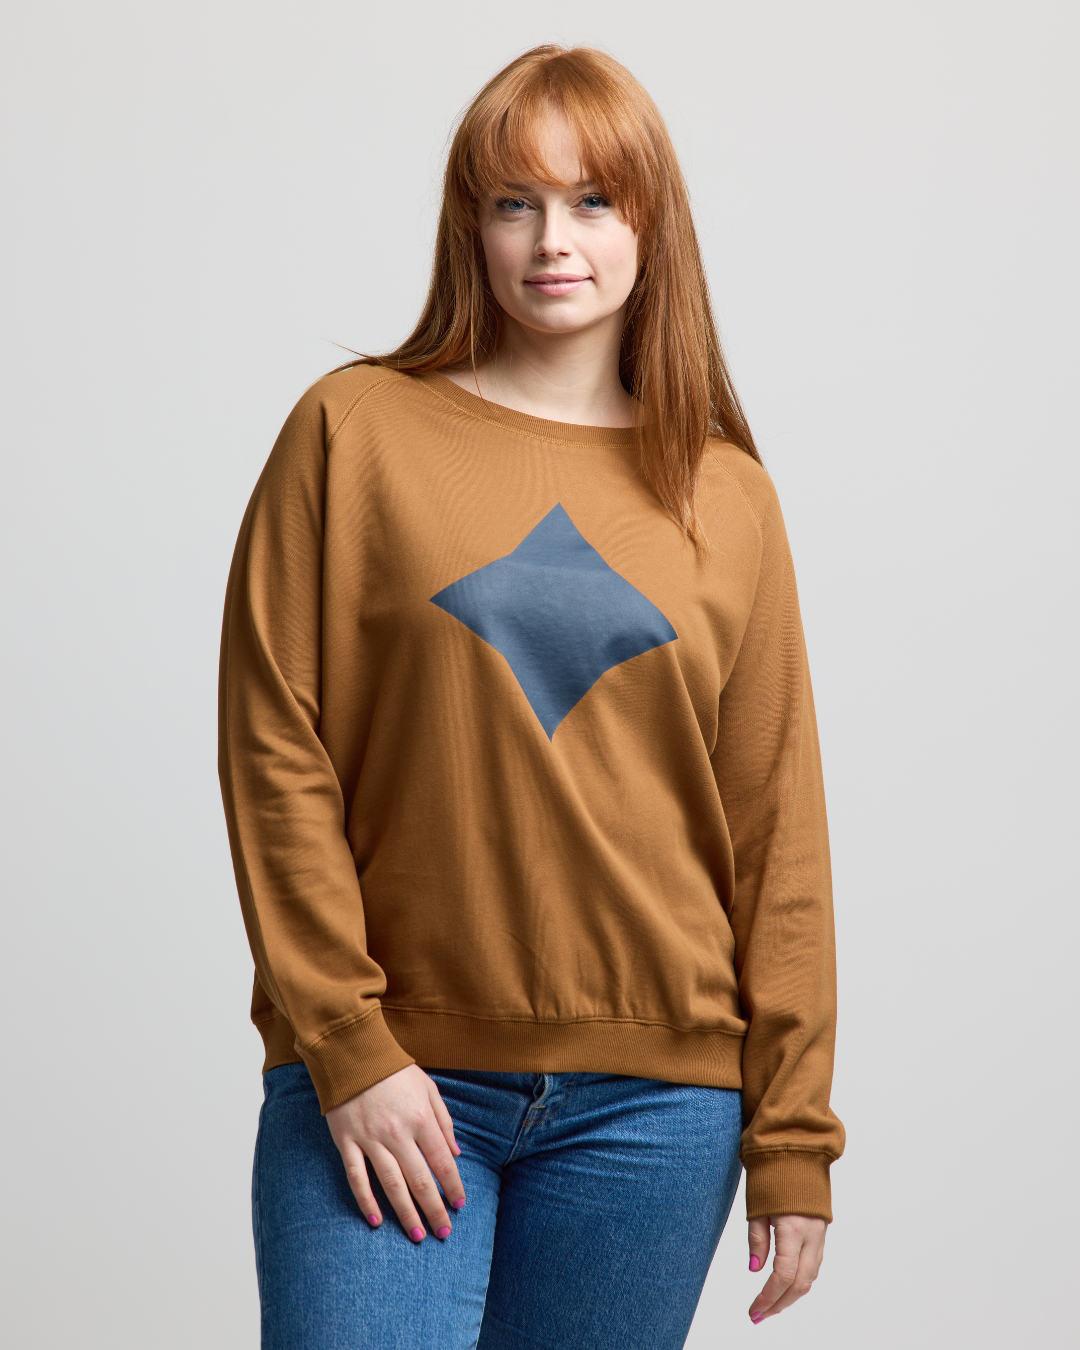 Sweater - Caramel with Blue Star - Stella + Gemma 8139